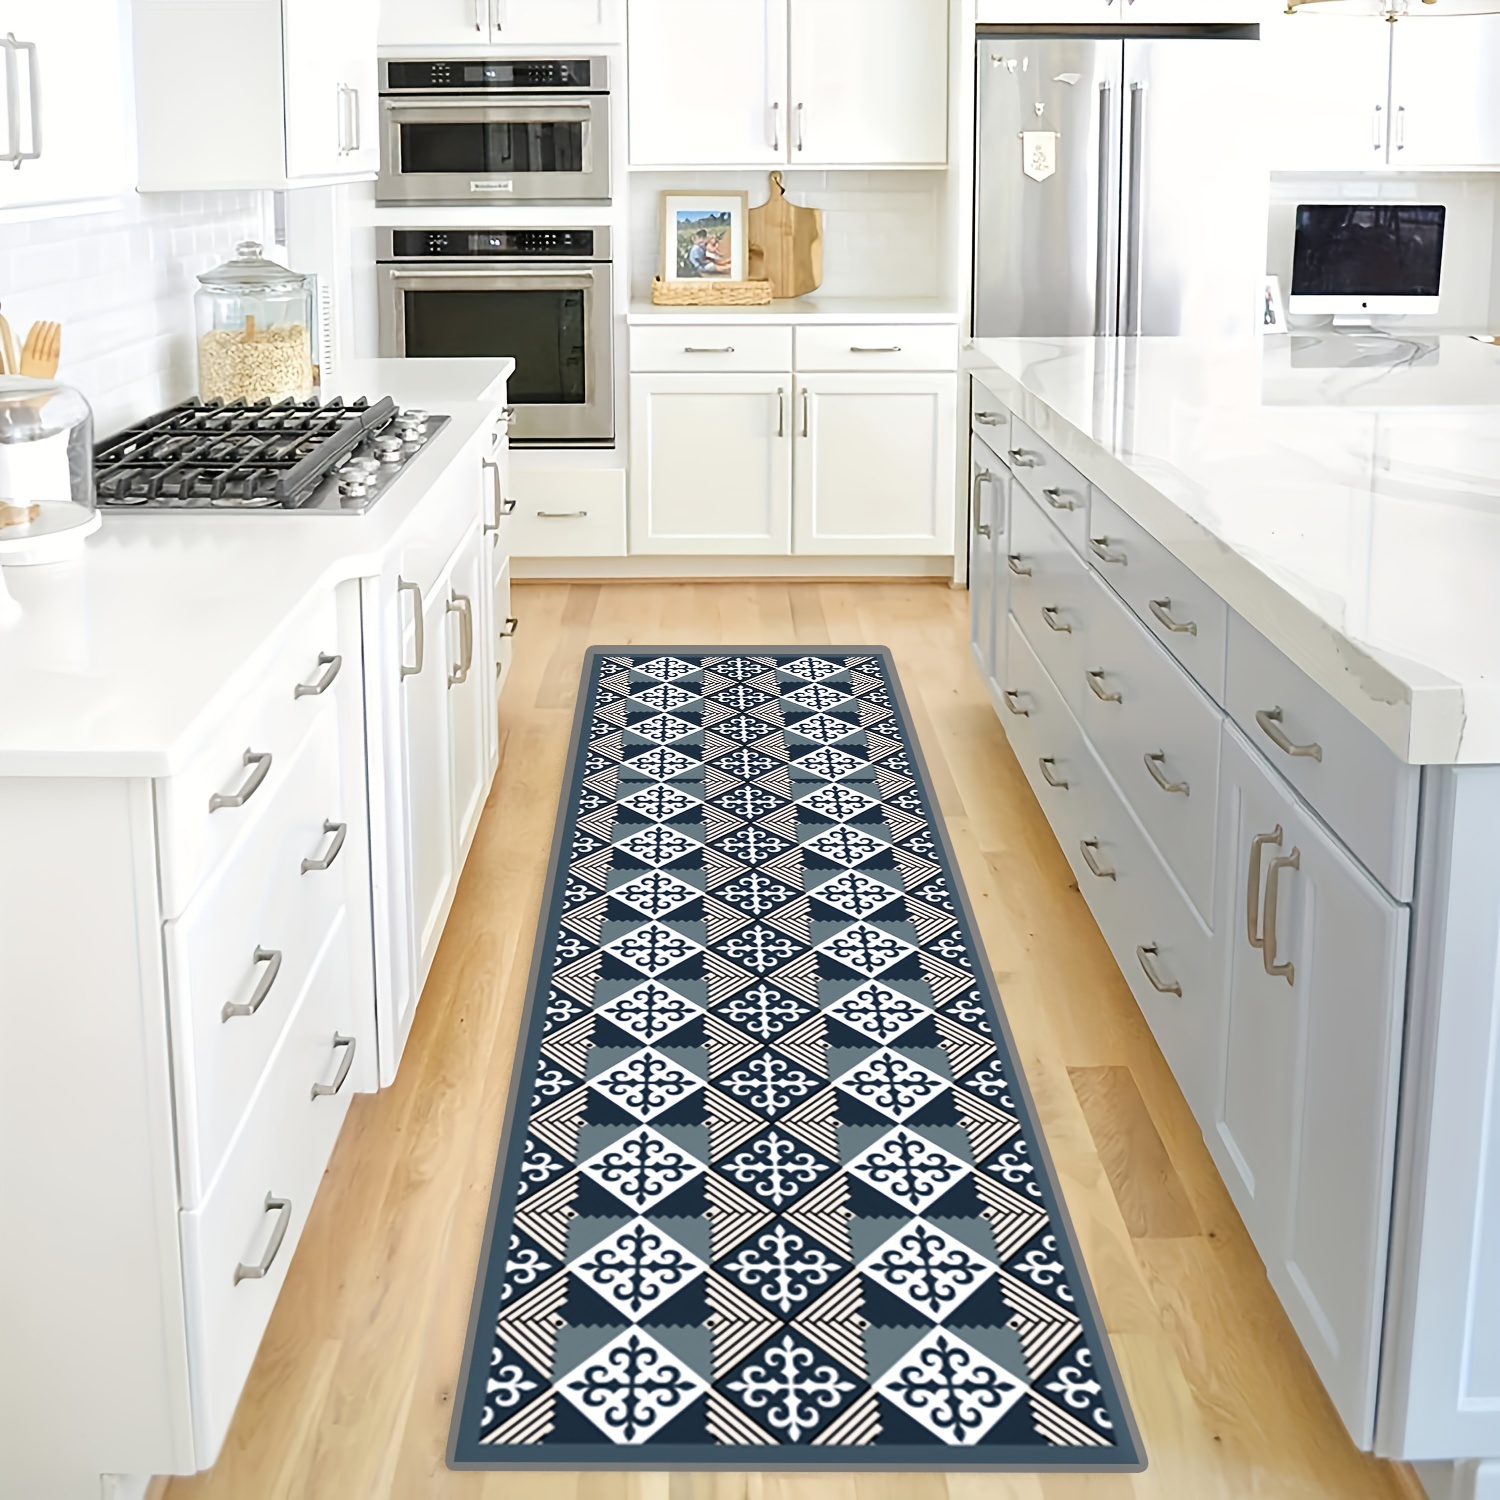 Modern Kitchen Floor Mat, Washable Floor Rug, Vinyl Mat for